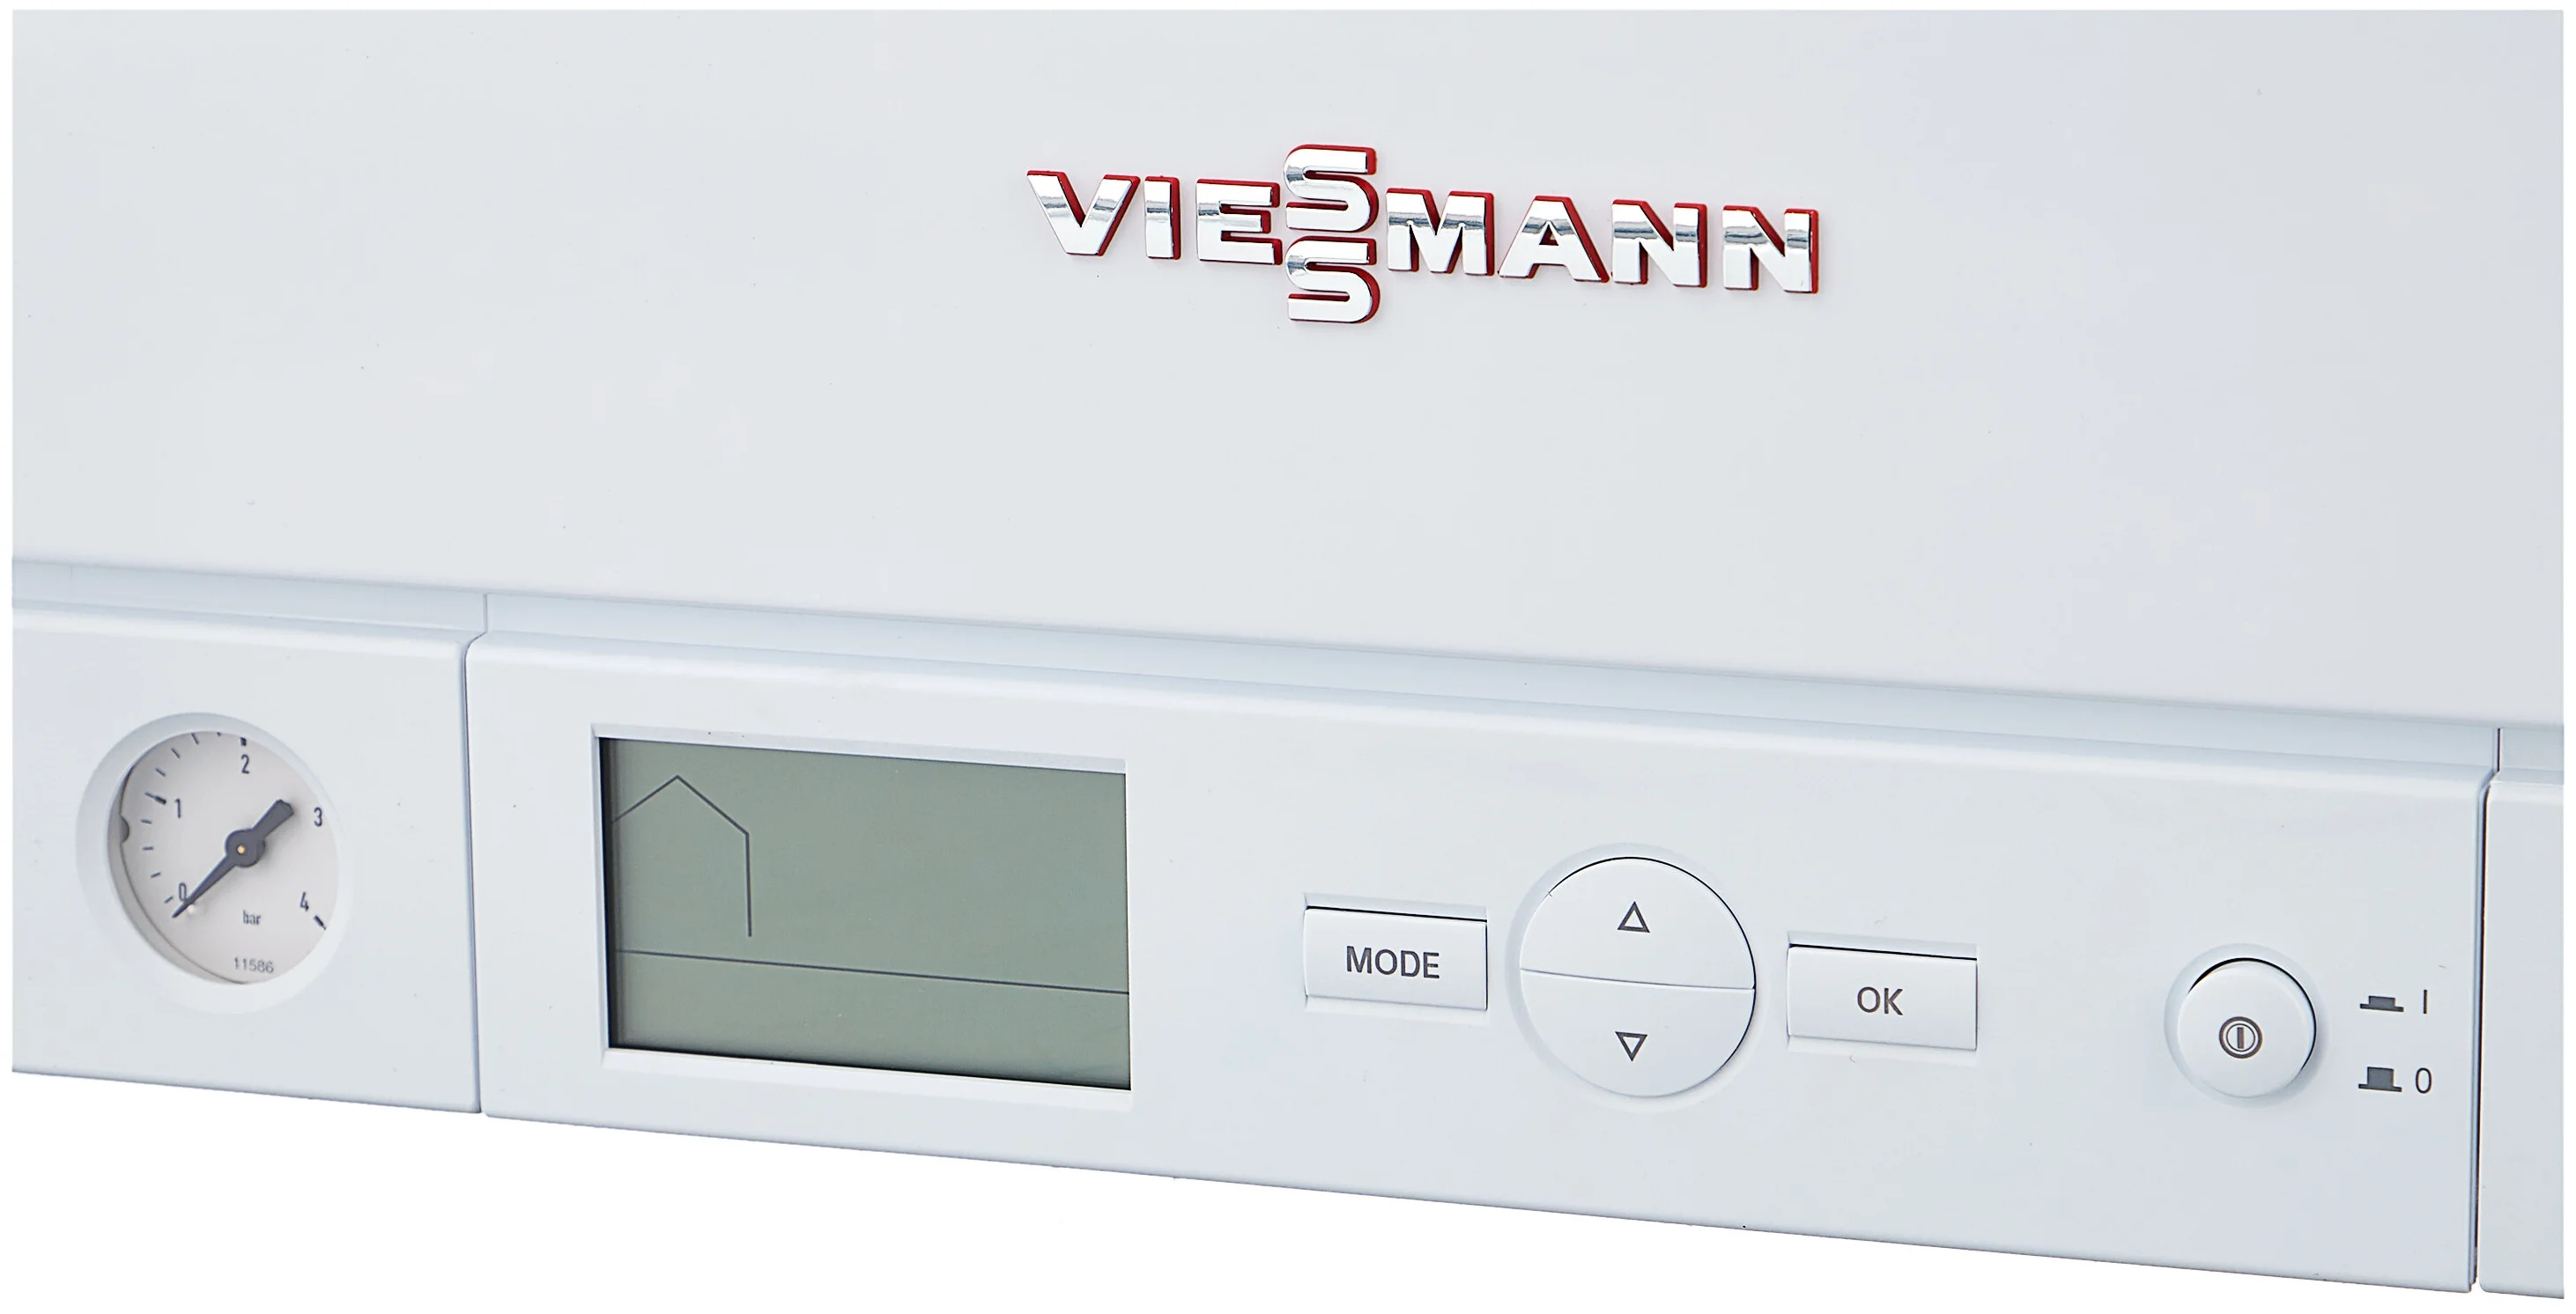 Viessmann Vitopend 100-W A1JB010, 24 кВт - размеры (ШхВхГ): 400x725x340 мм